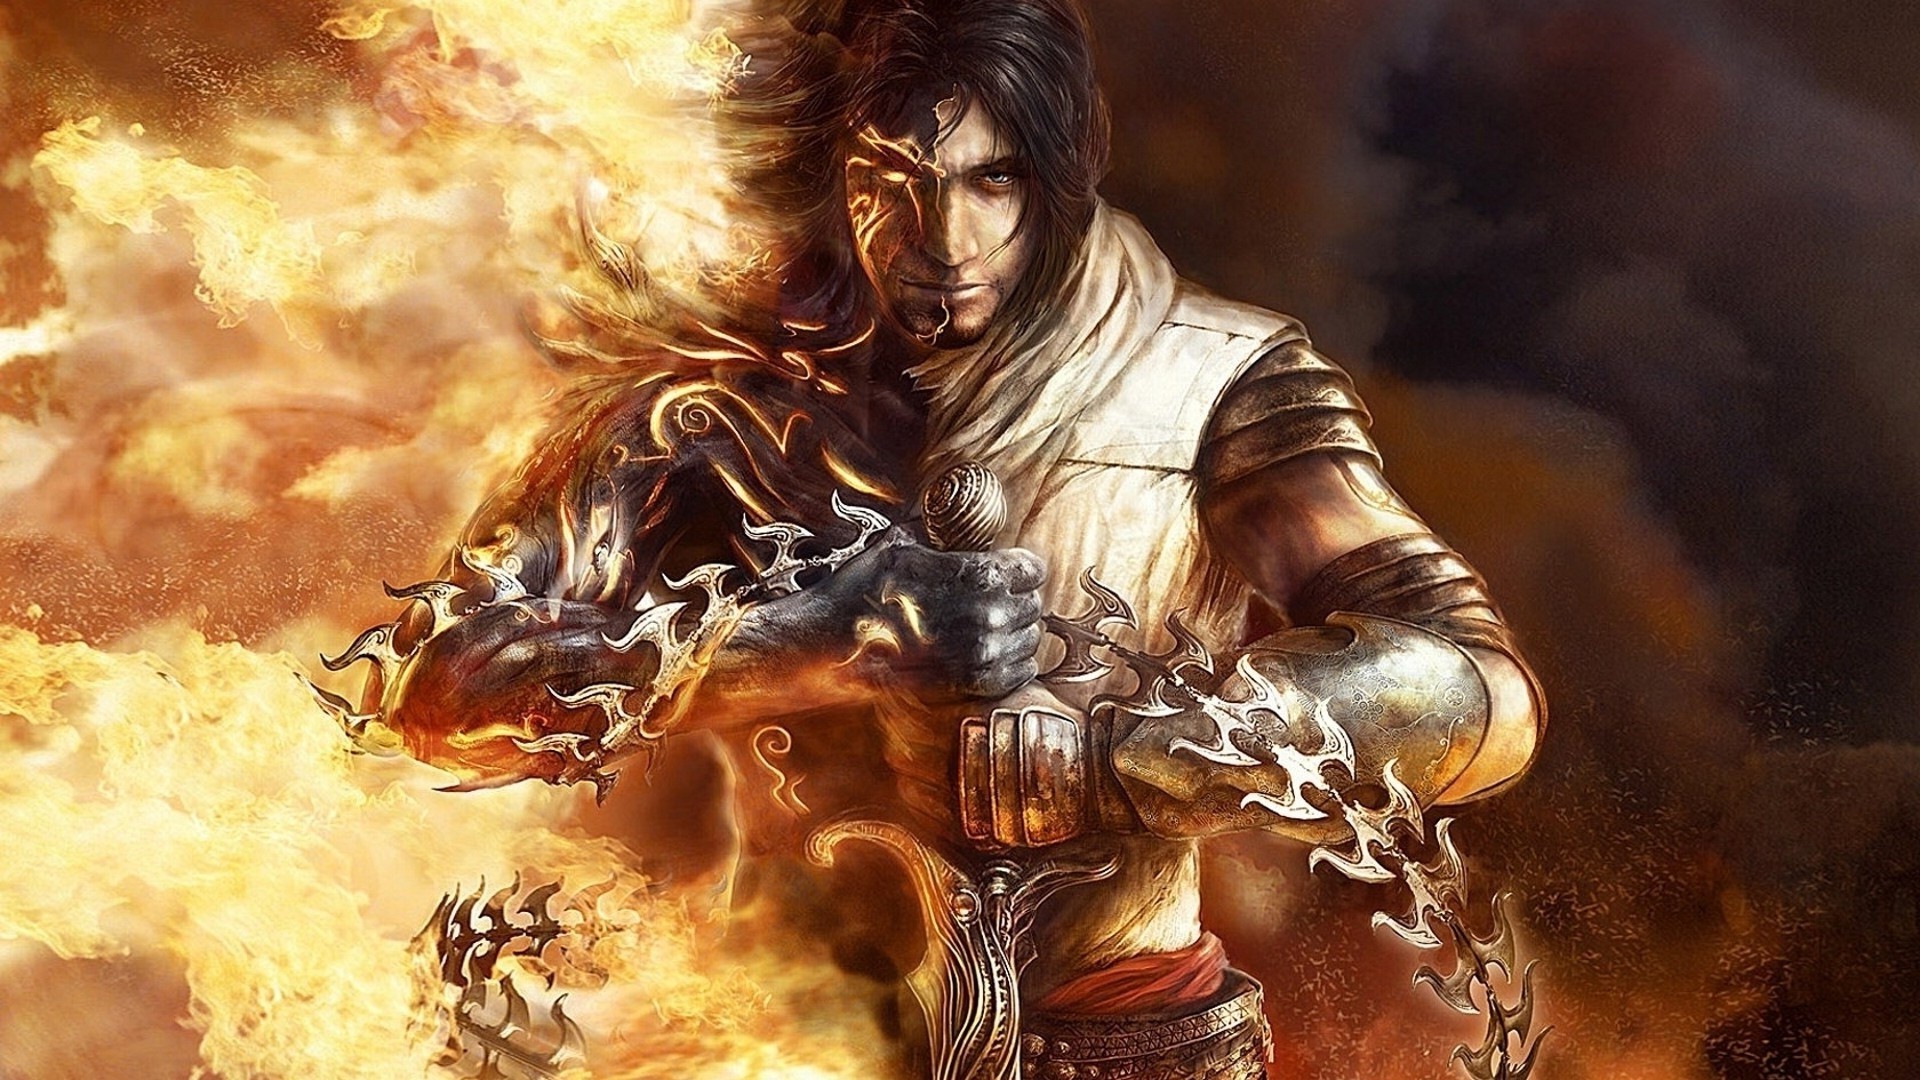 fantasy Art, Heroes, Men, Sword, Fire, Armor, Prince Of Persia ...